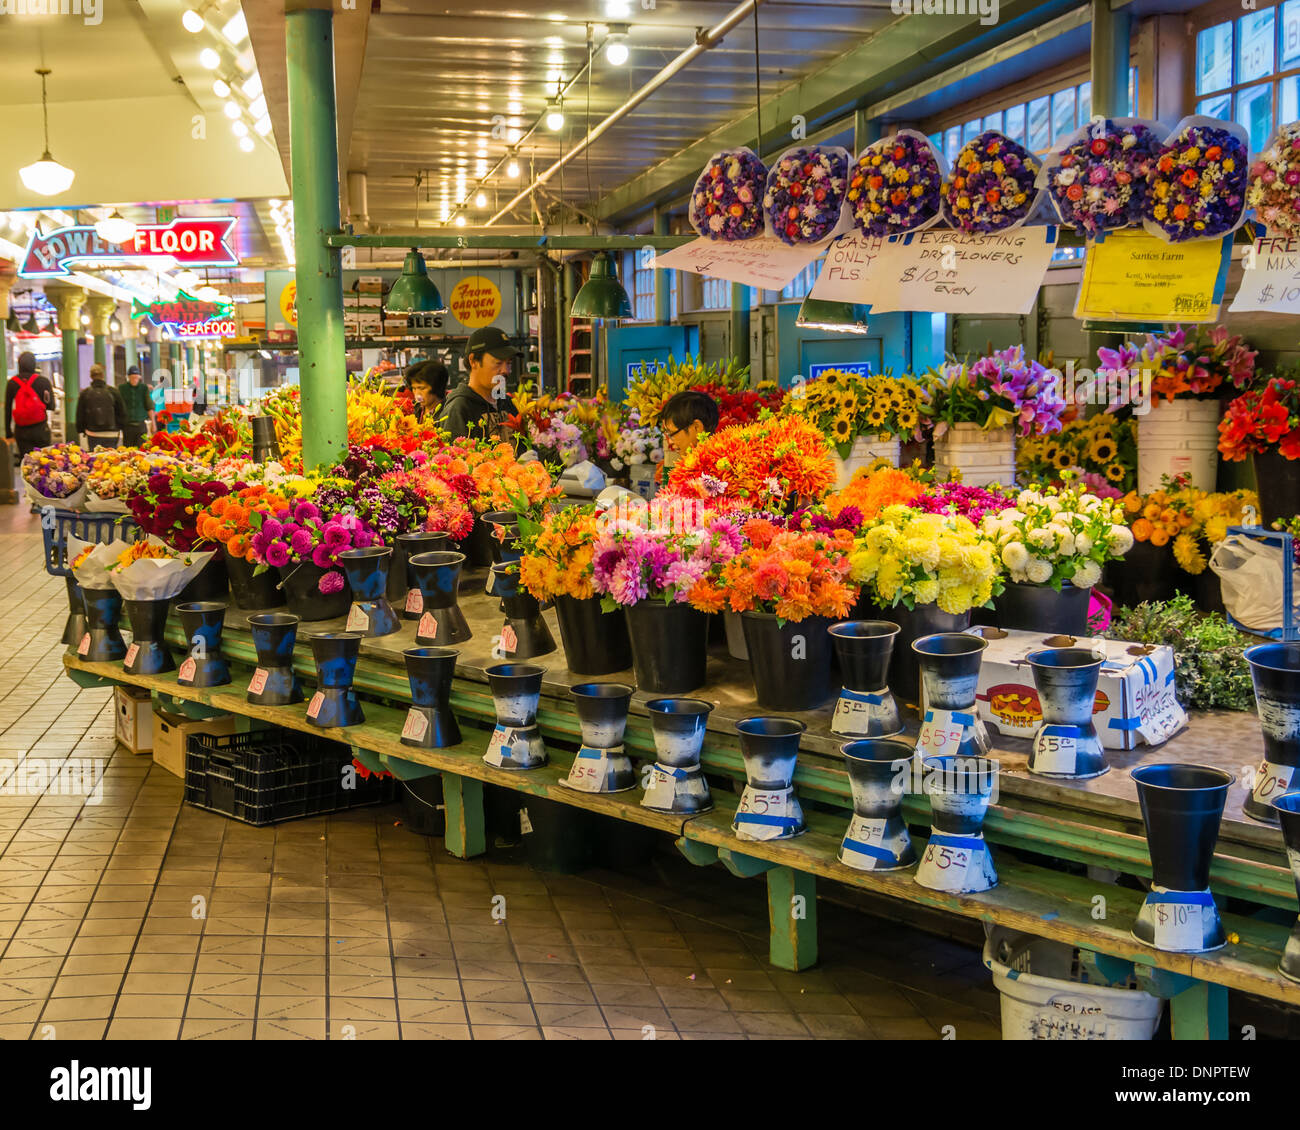 Flower market stall with fresh flowers on display Pike Place Market Seattle, Washington, USA Stock Photo